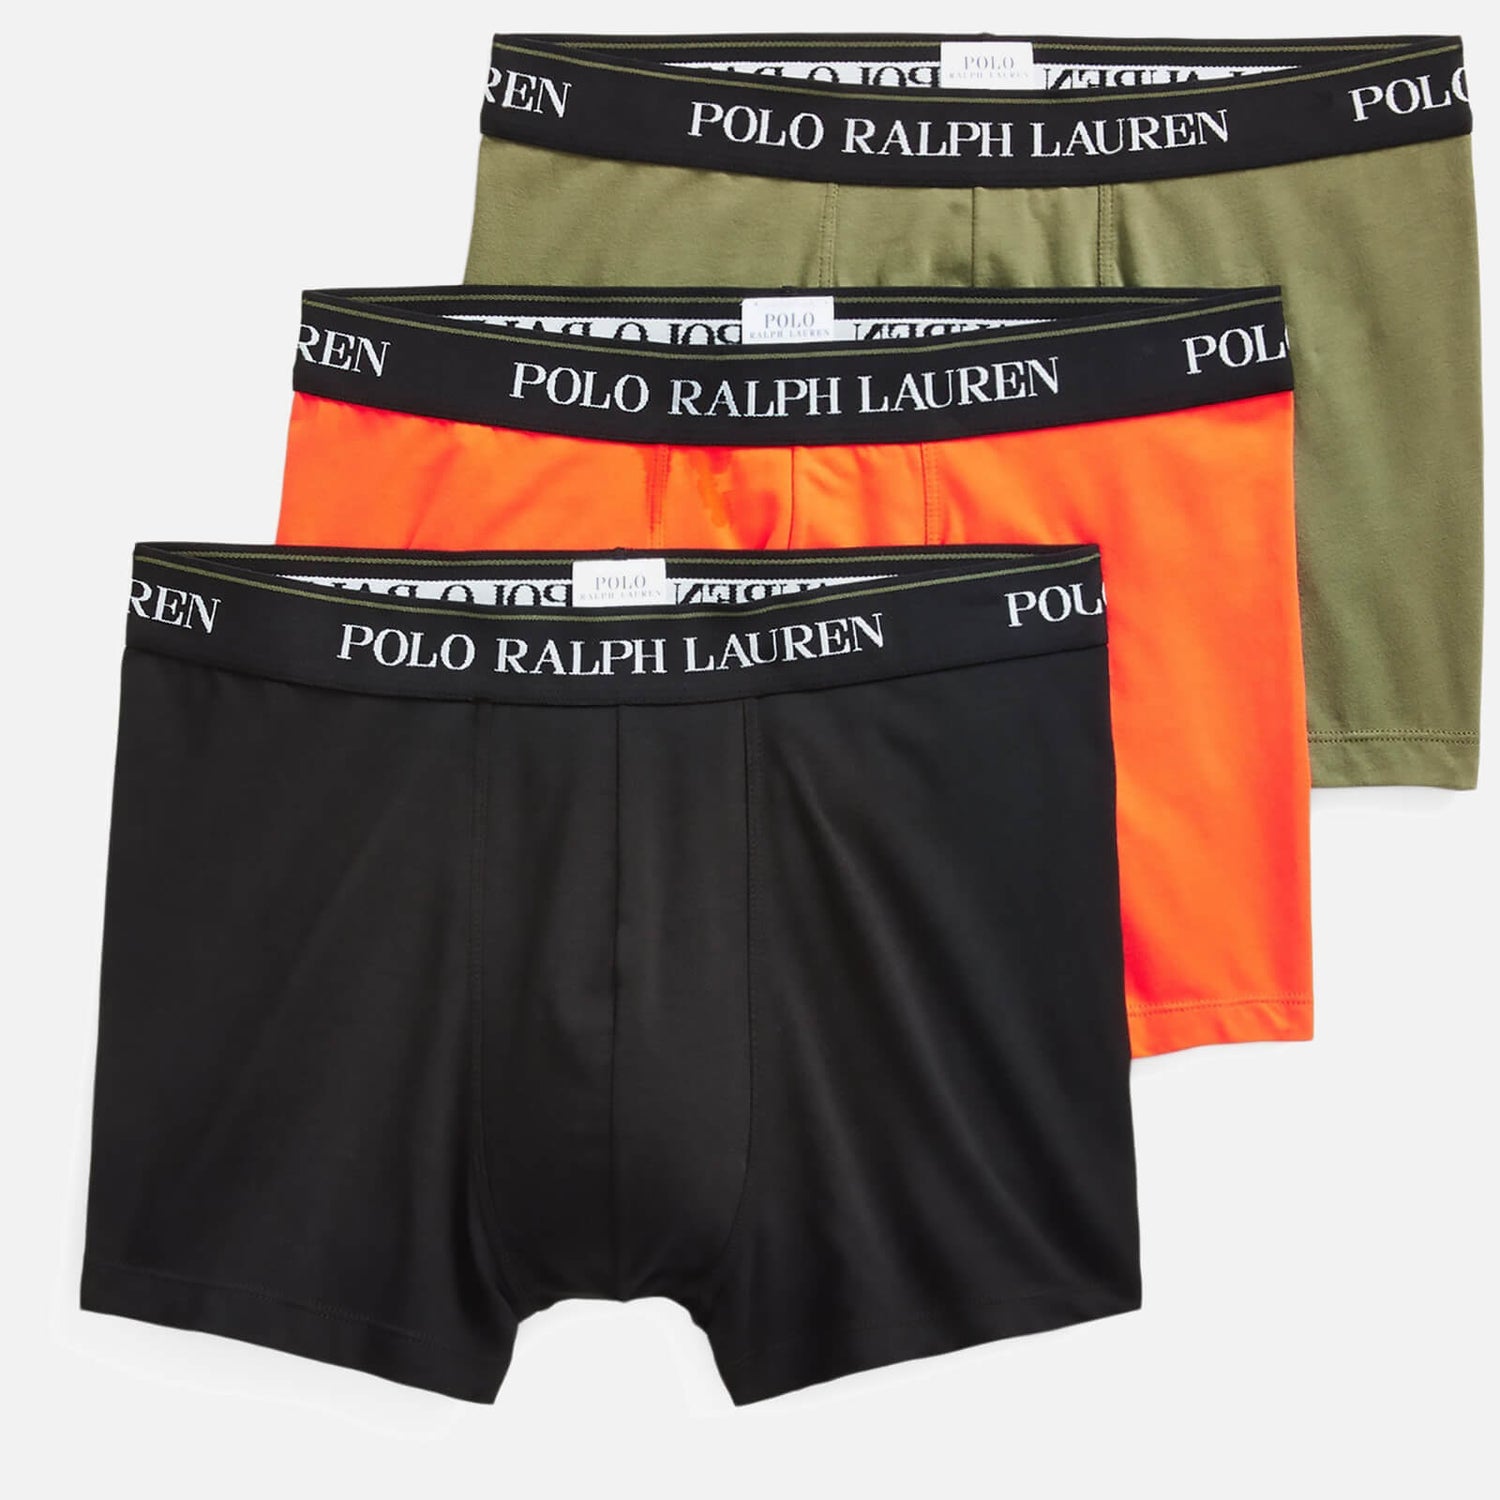 Polo Ralph Lauren Men's 3-Pack Classic Trunks - Black/Sailing Orange/Army Olive